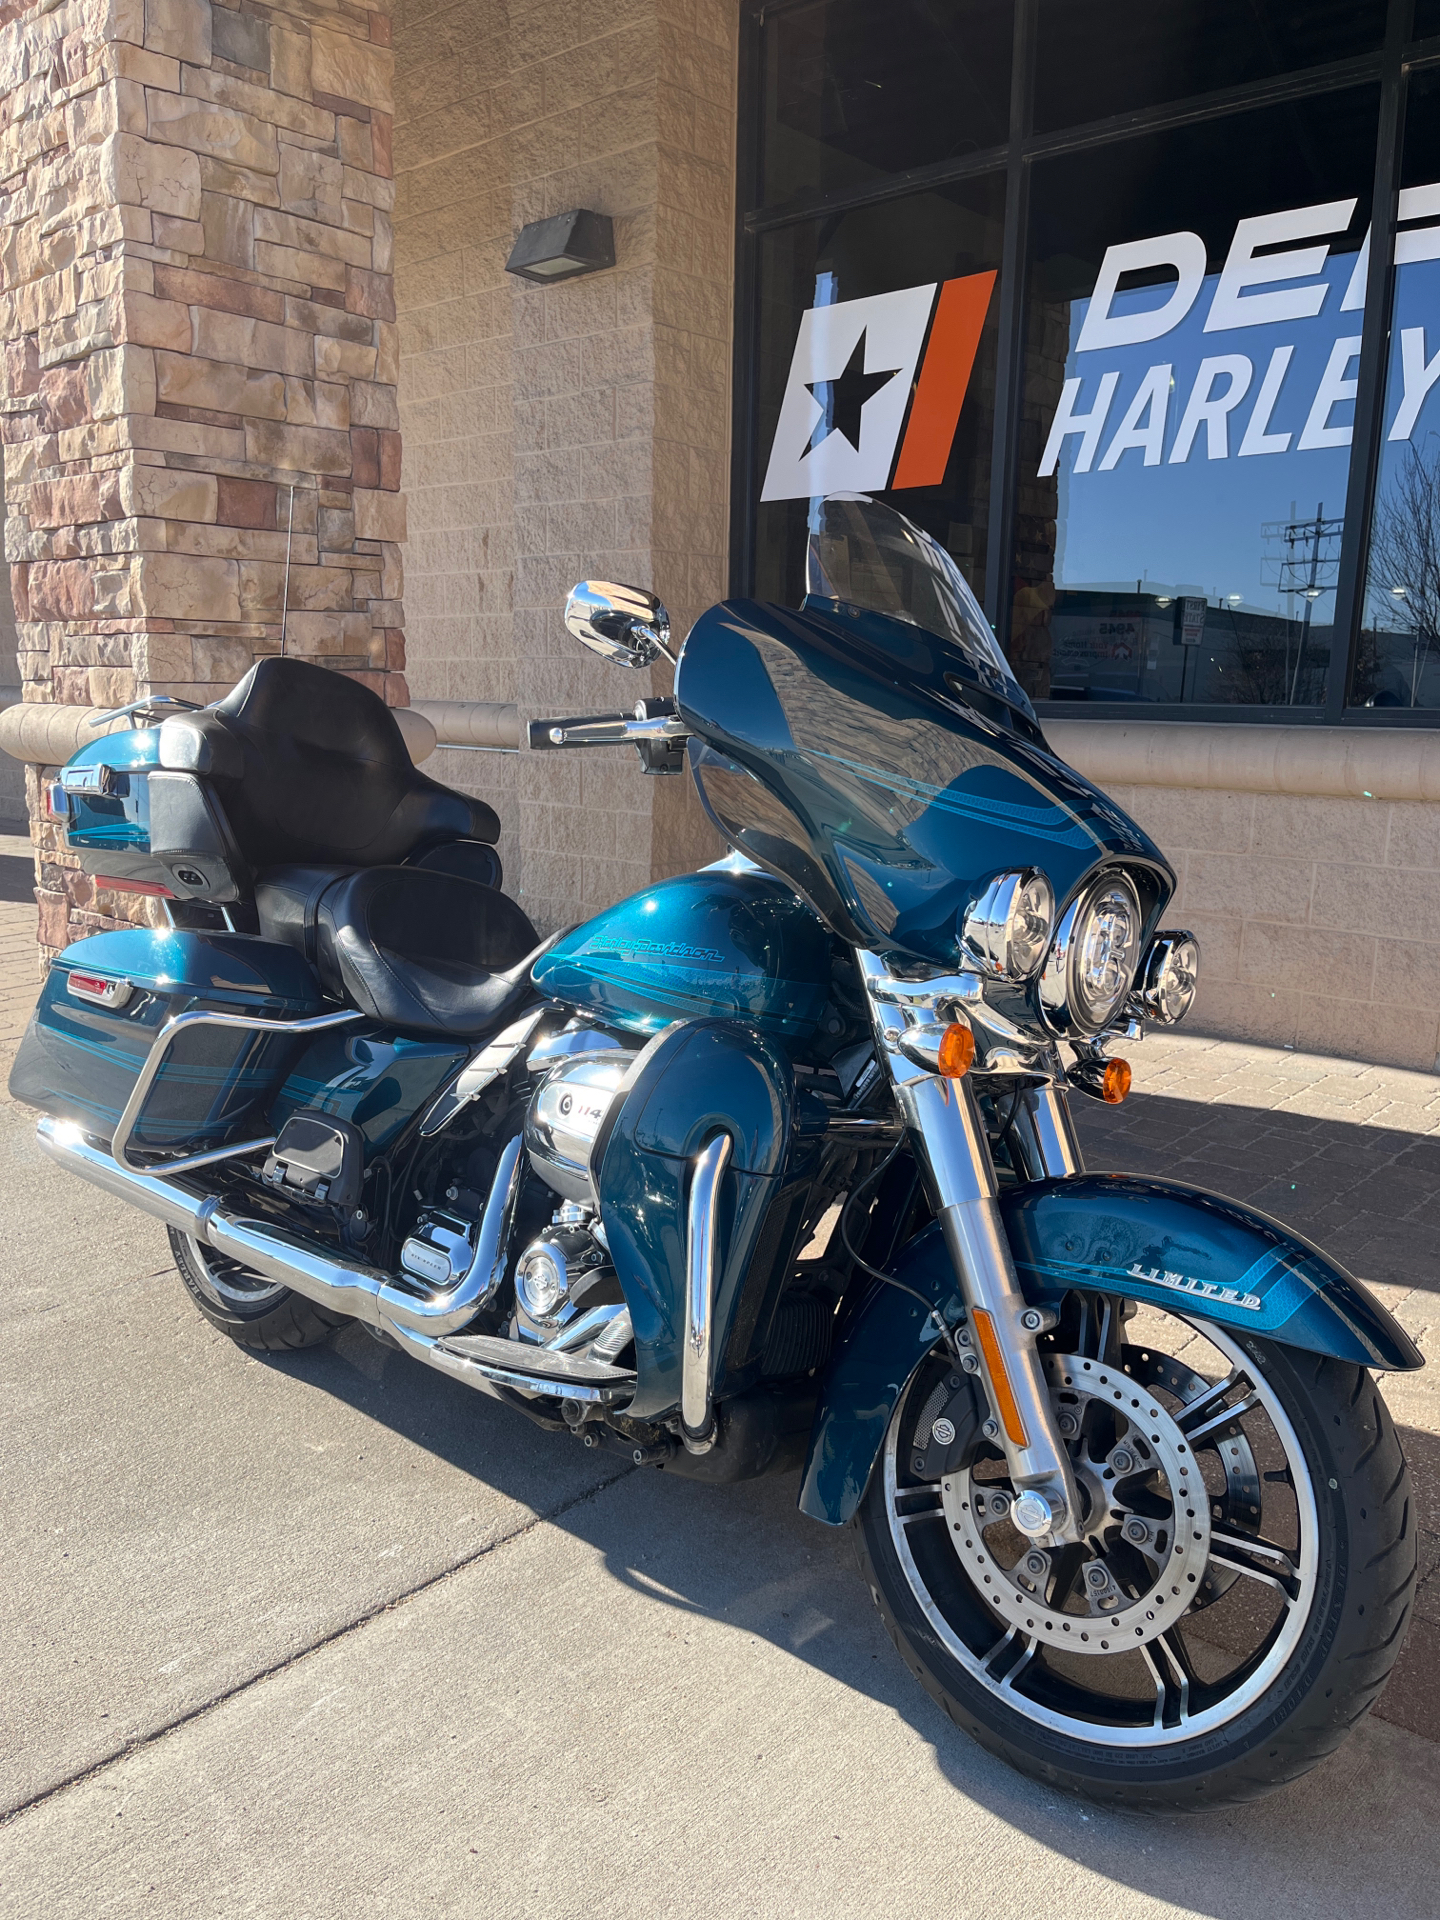 2020 Harley-Davidson Ultra Limited in Omaha, Nebraska - Photo 2